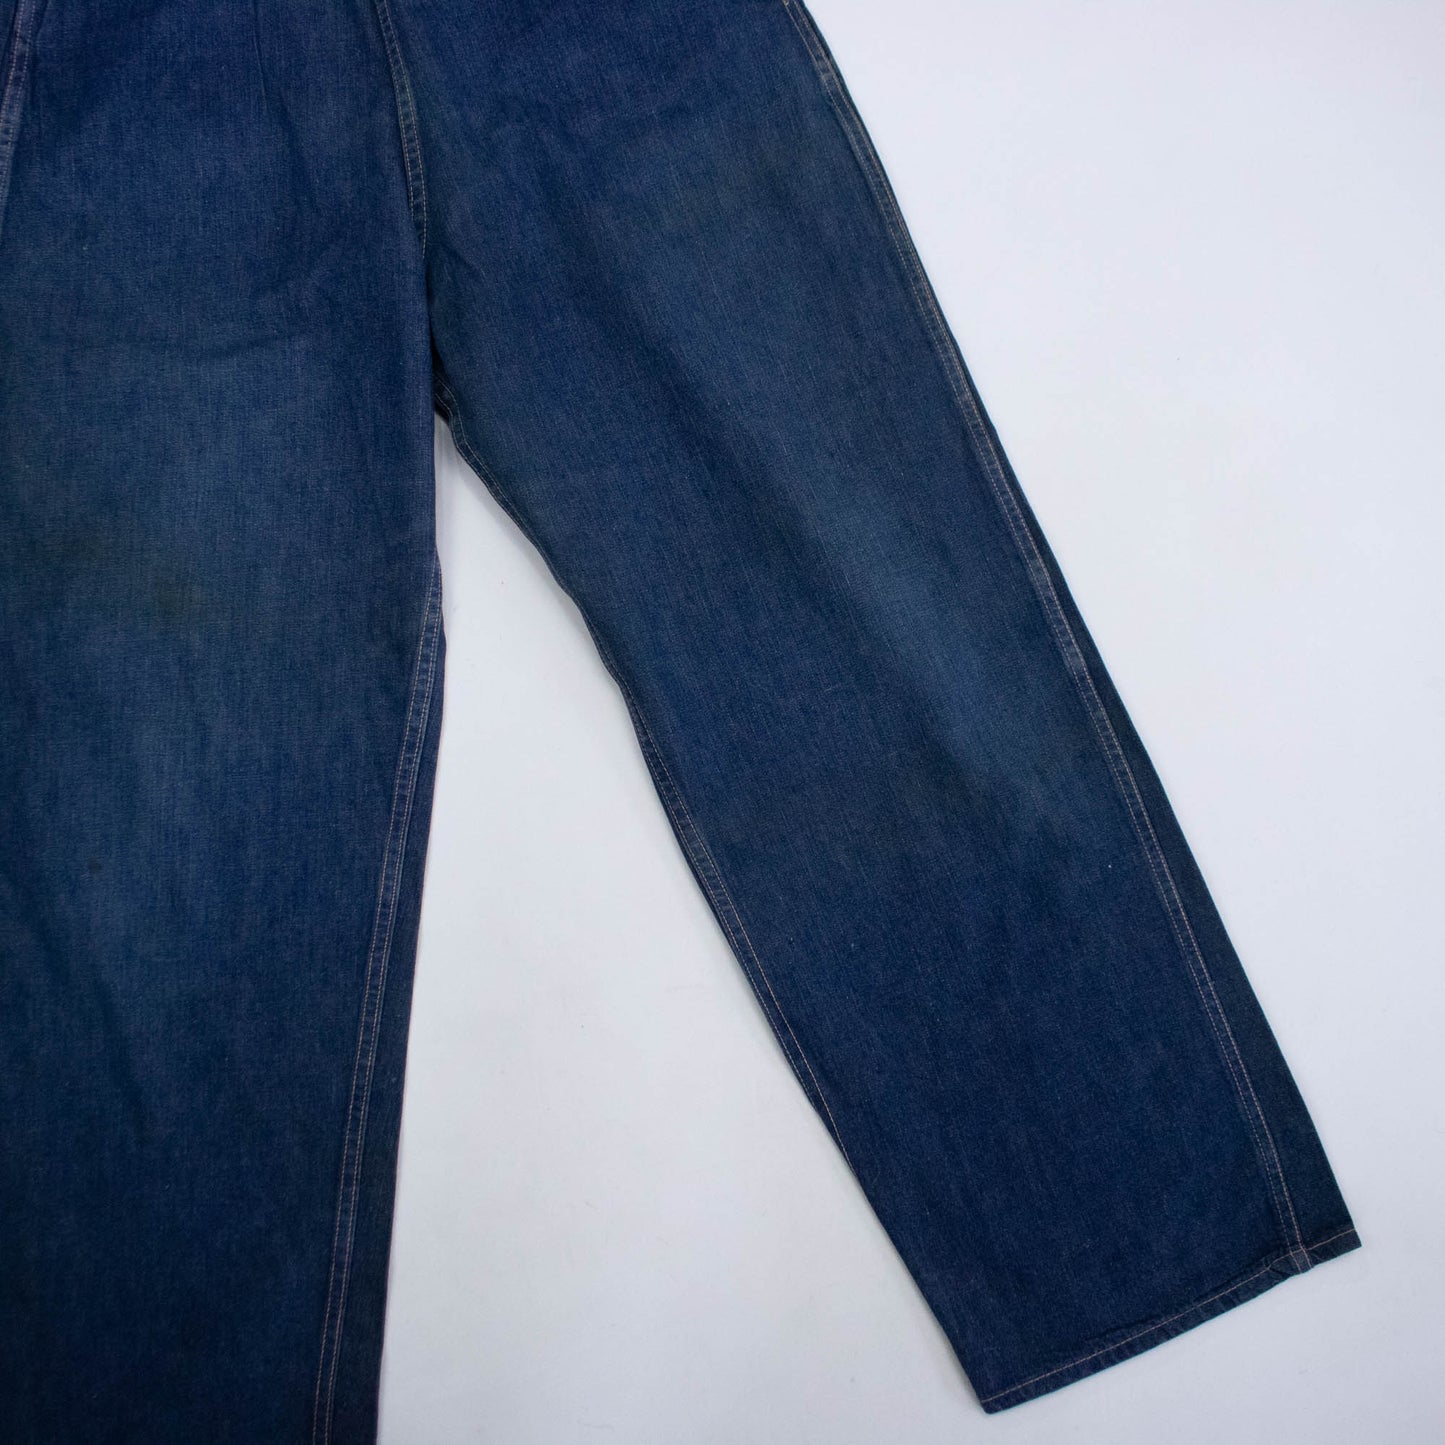 40s 50s Sz 29 Dark Side Zip Jeans